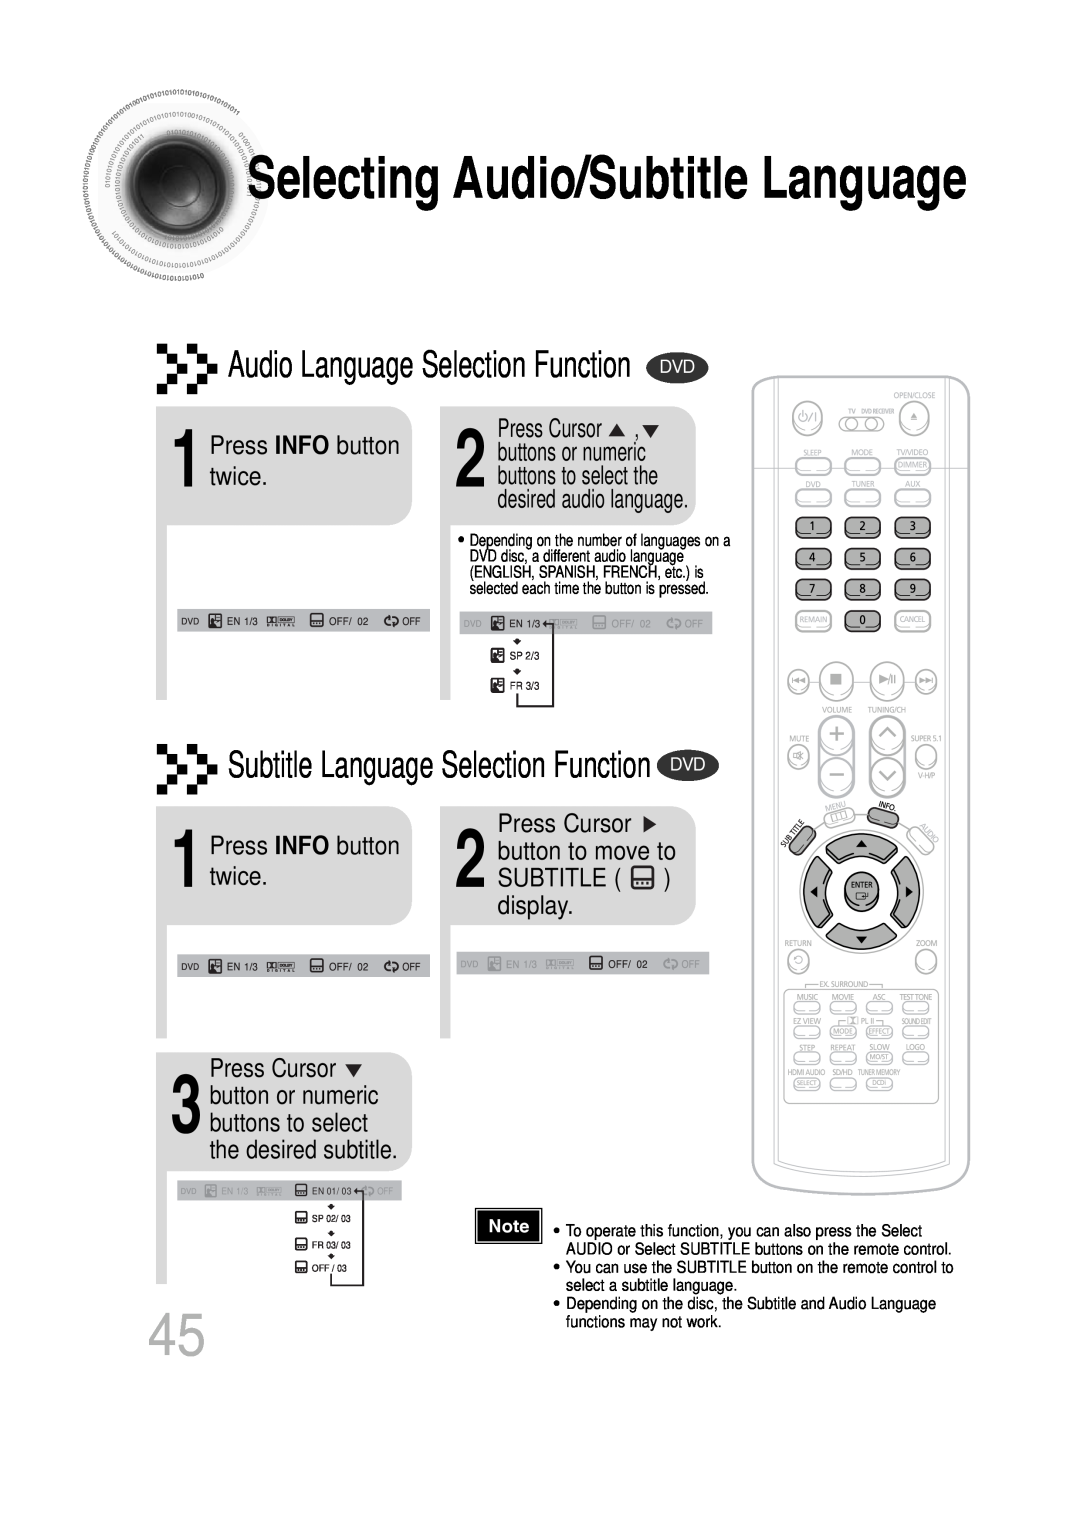 Samsung 20060814151350437 SelectingAudio/Subtitle Language, Audio Language Selection Function DVD, desired audio language 